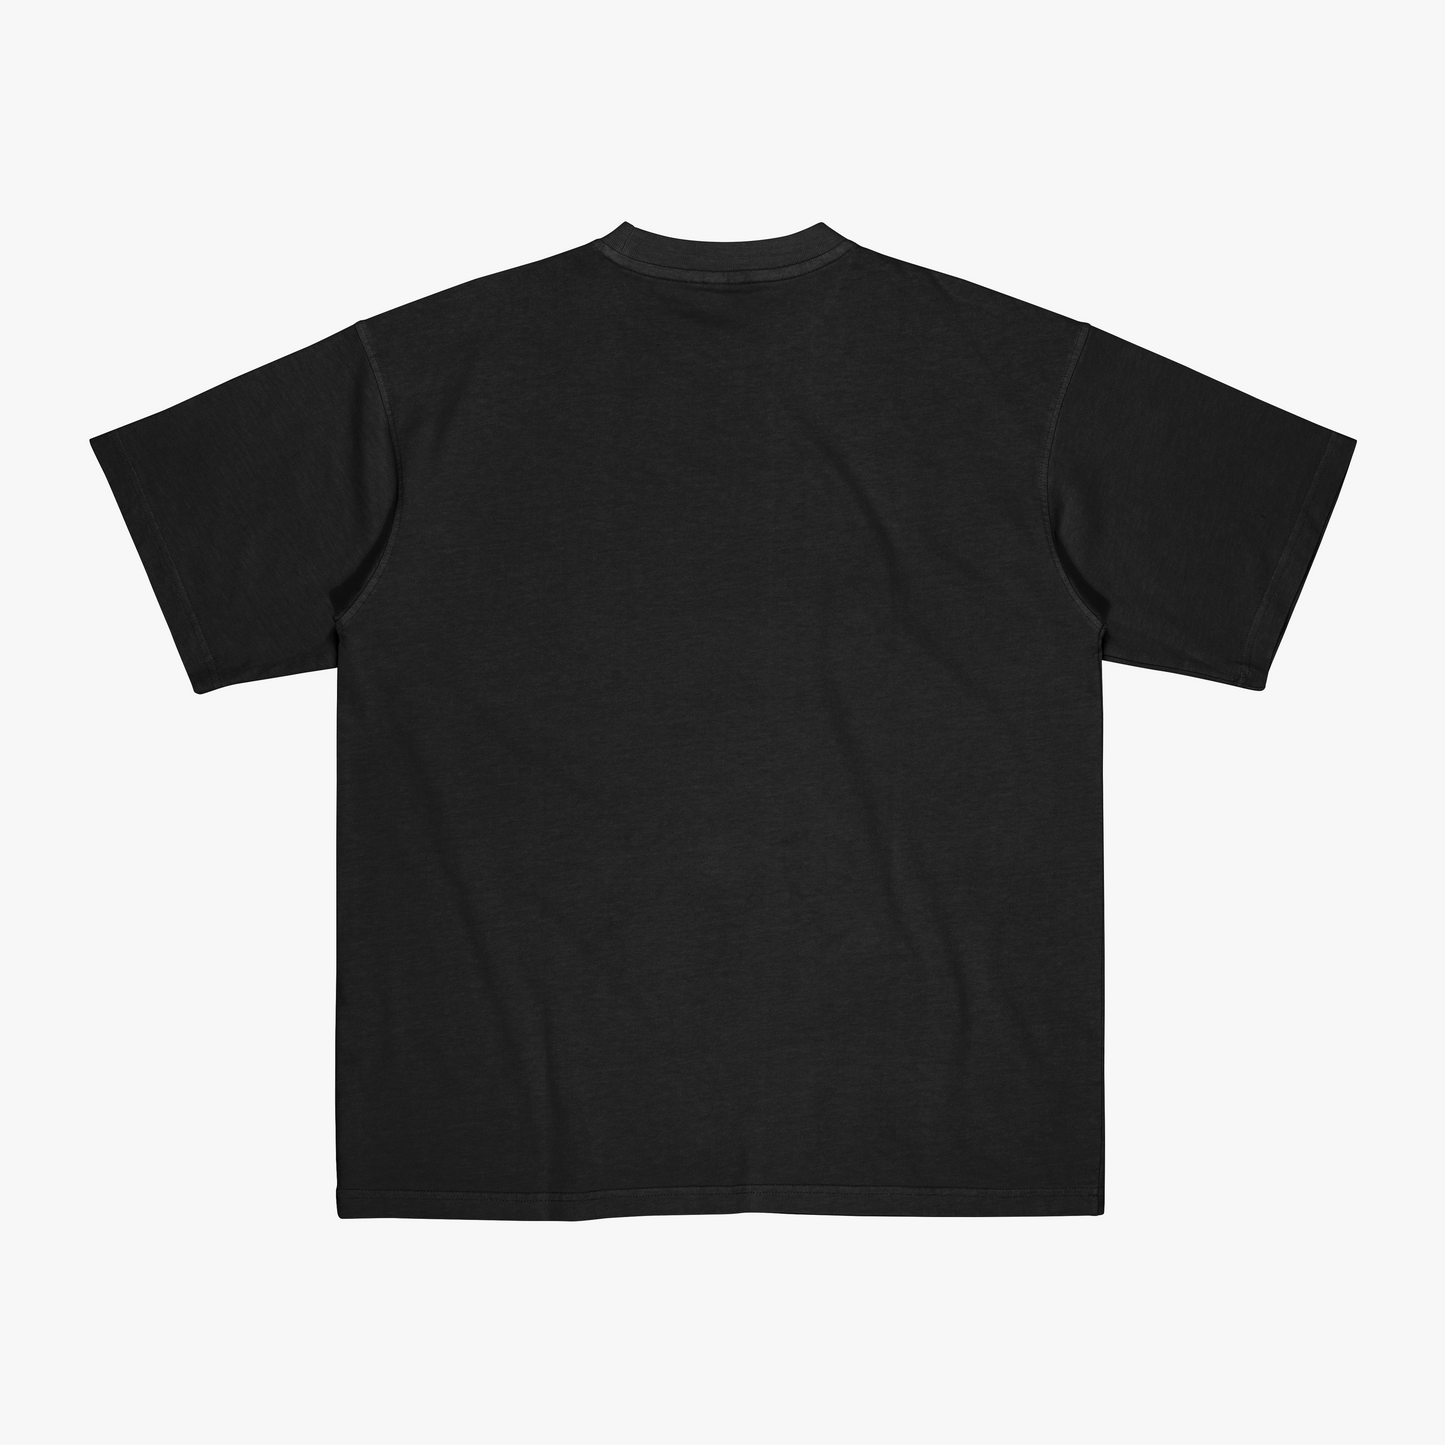 FakeButReal Bootleg Kobe Bryant Oversize Black T-Shirt